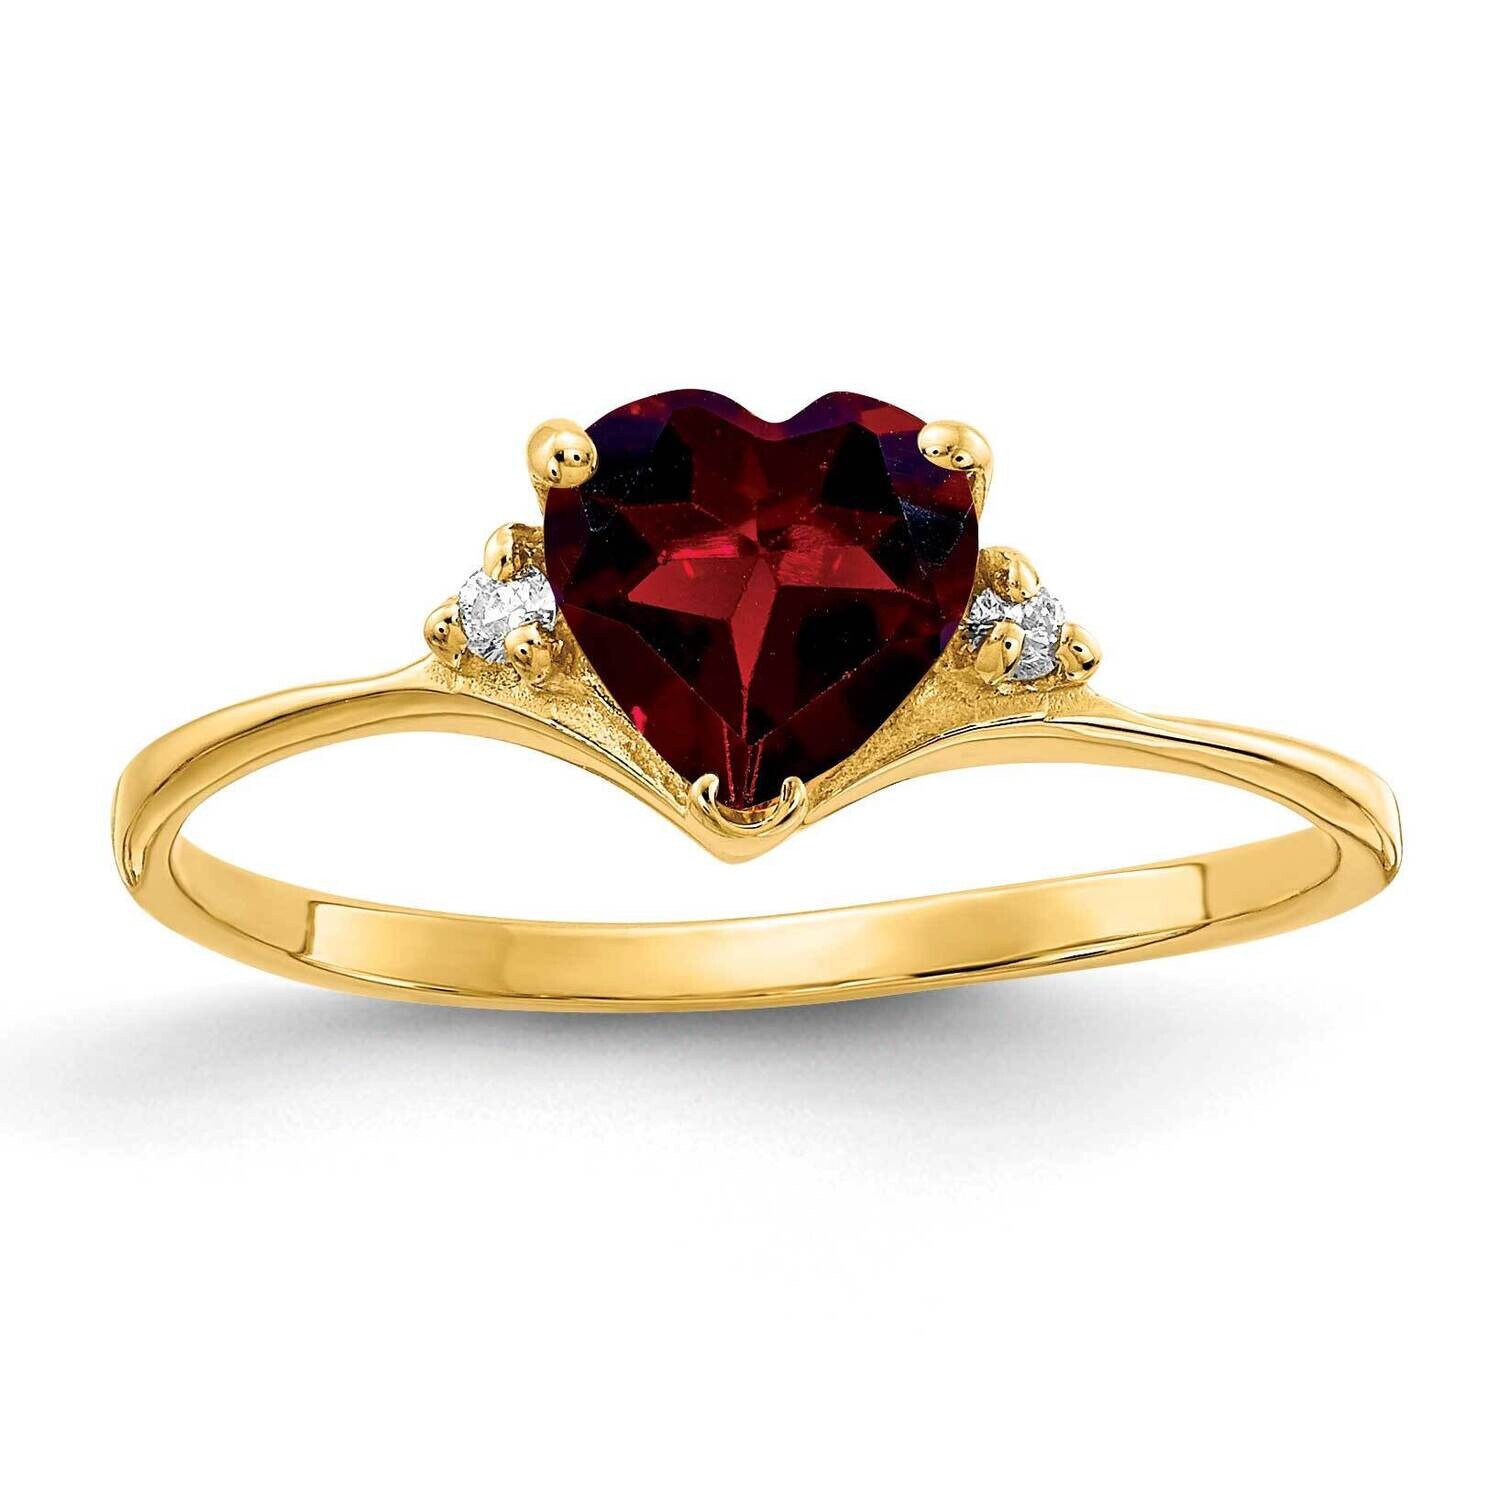 6mm Heart Garnet Diamond Ring 14k Gold Y2185GA/A